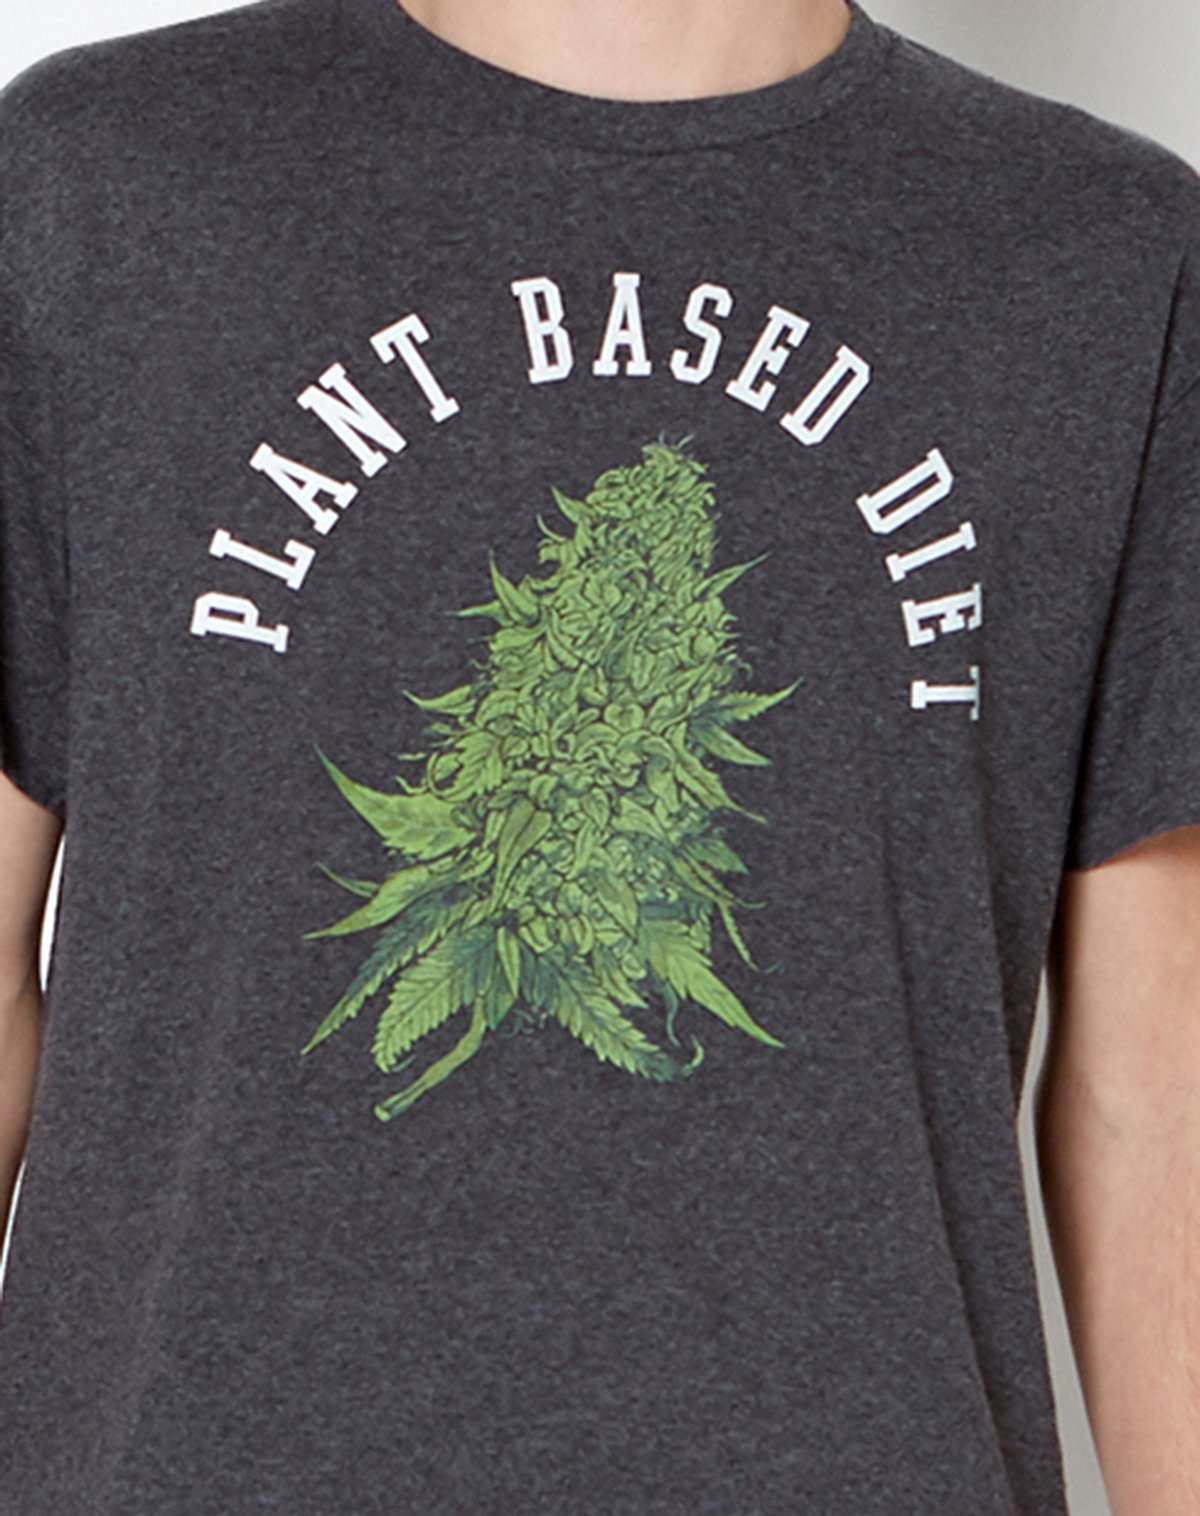 Plant Based Diet T Shirt